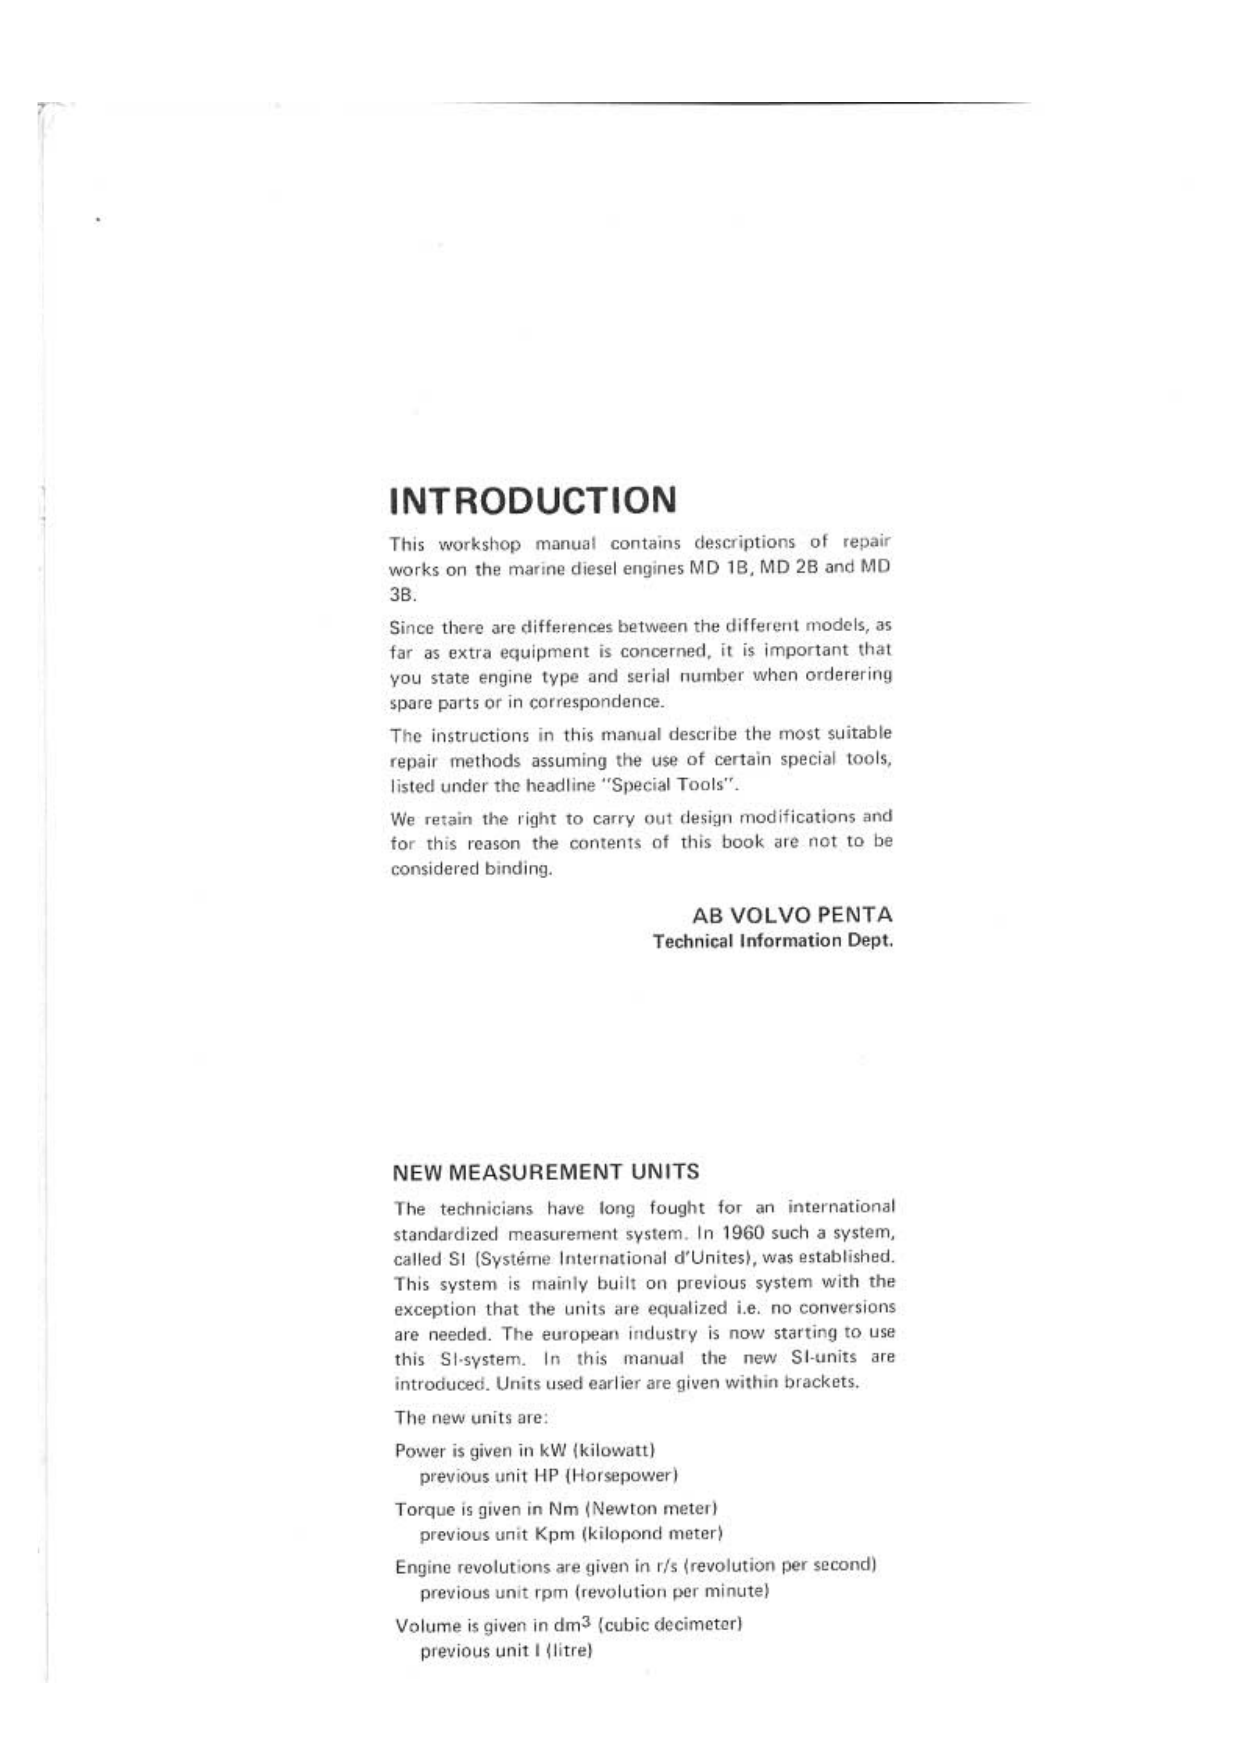 Volvo Penta MD1B, MD2B, MD3B marine diesel engine workshop manual Preview image 2